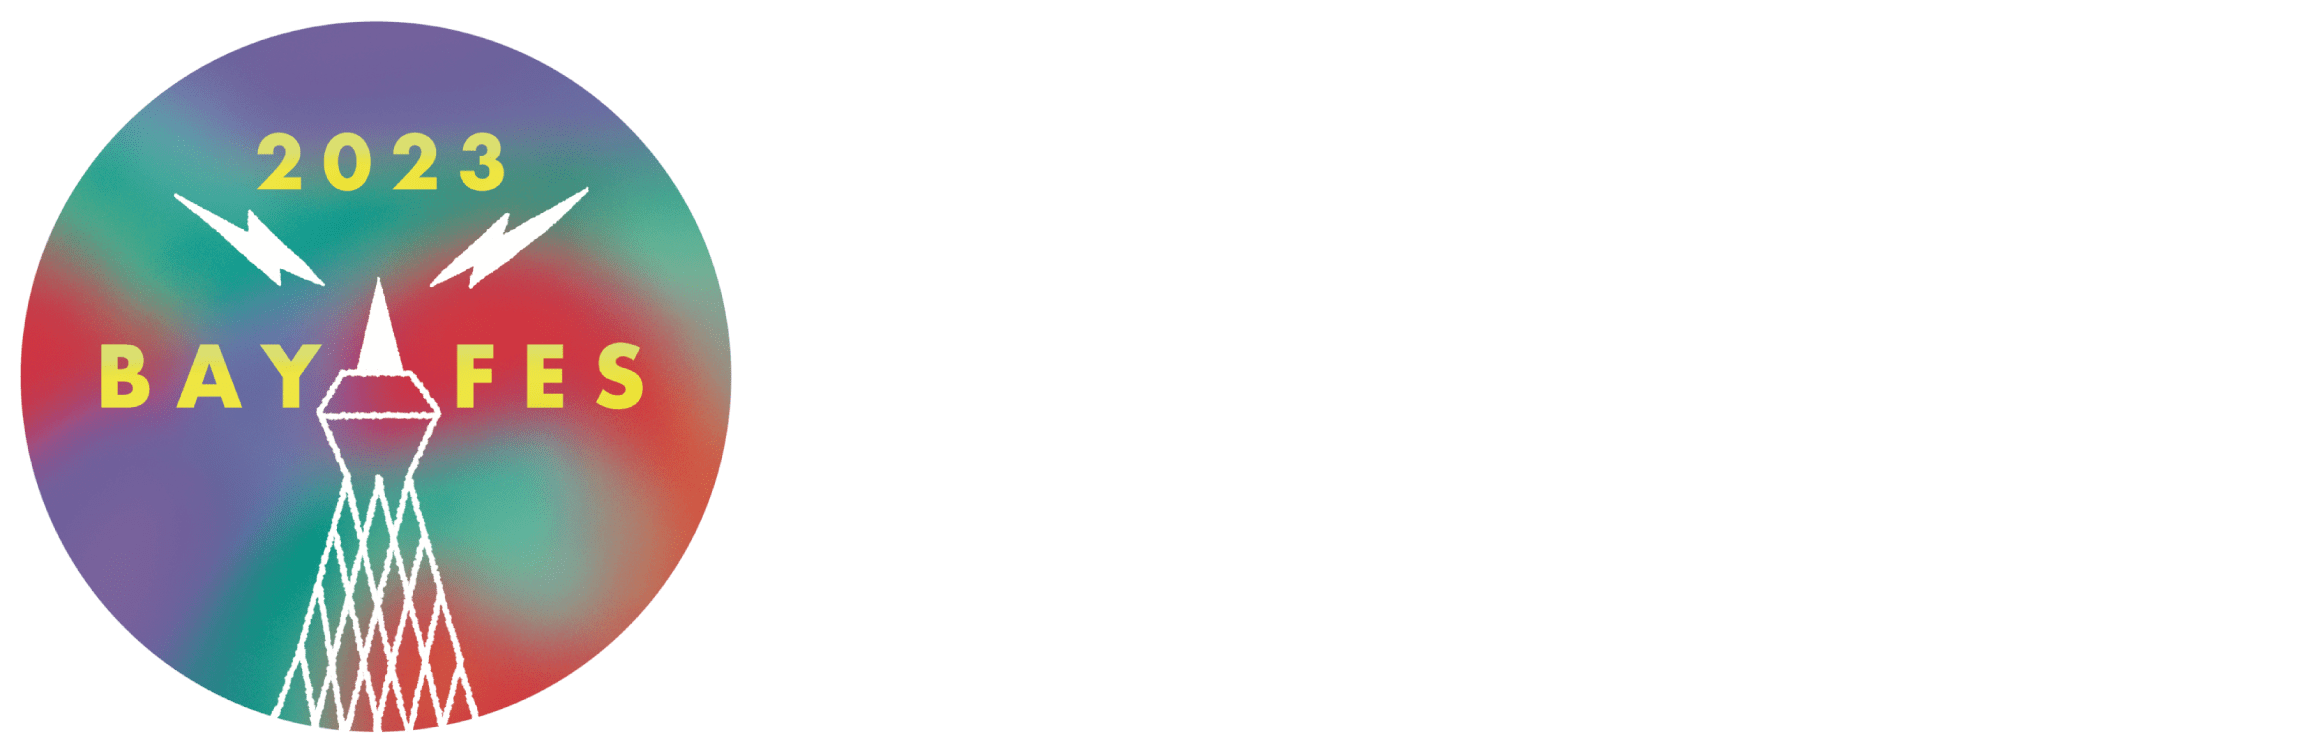 2023923sat-924sun BAYSIDE FESTIVAL 2023